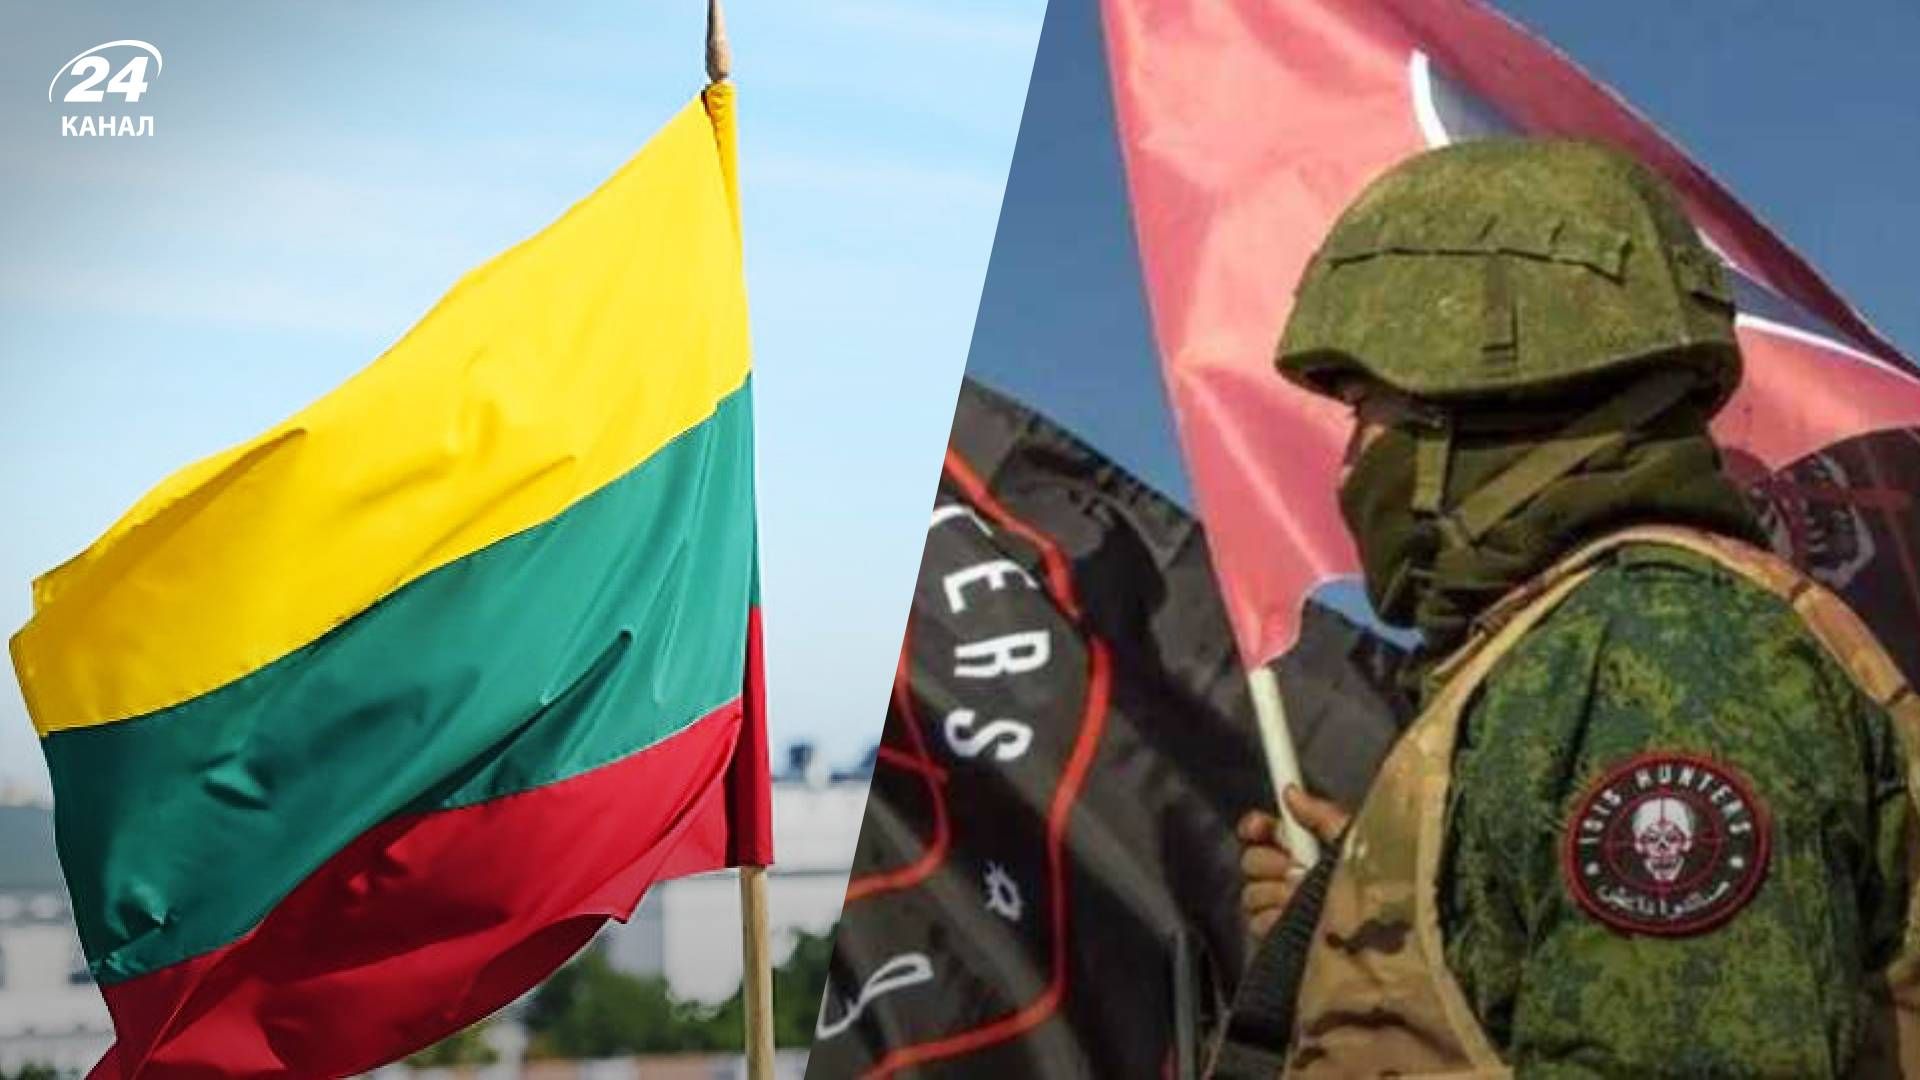 Литва закрывает два пропускных пункта на границе с Беларусью через ПВК Вагнера - 24 Канал